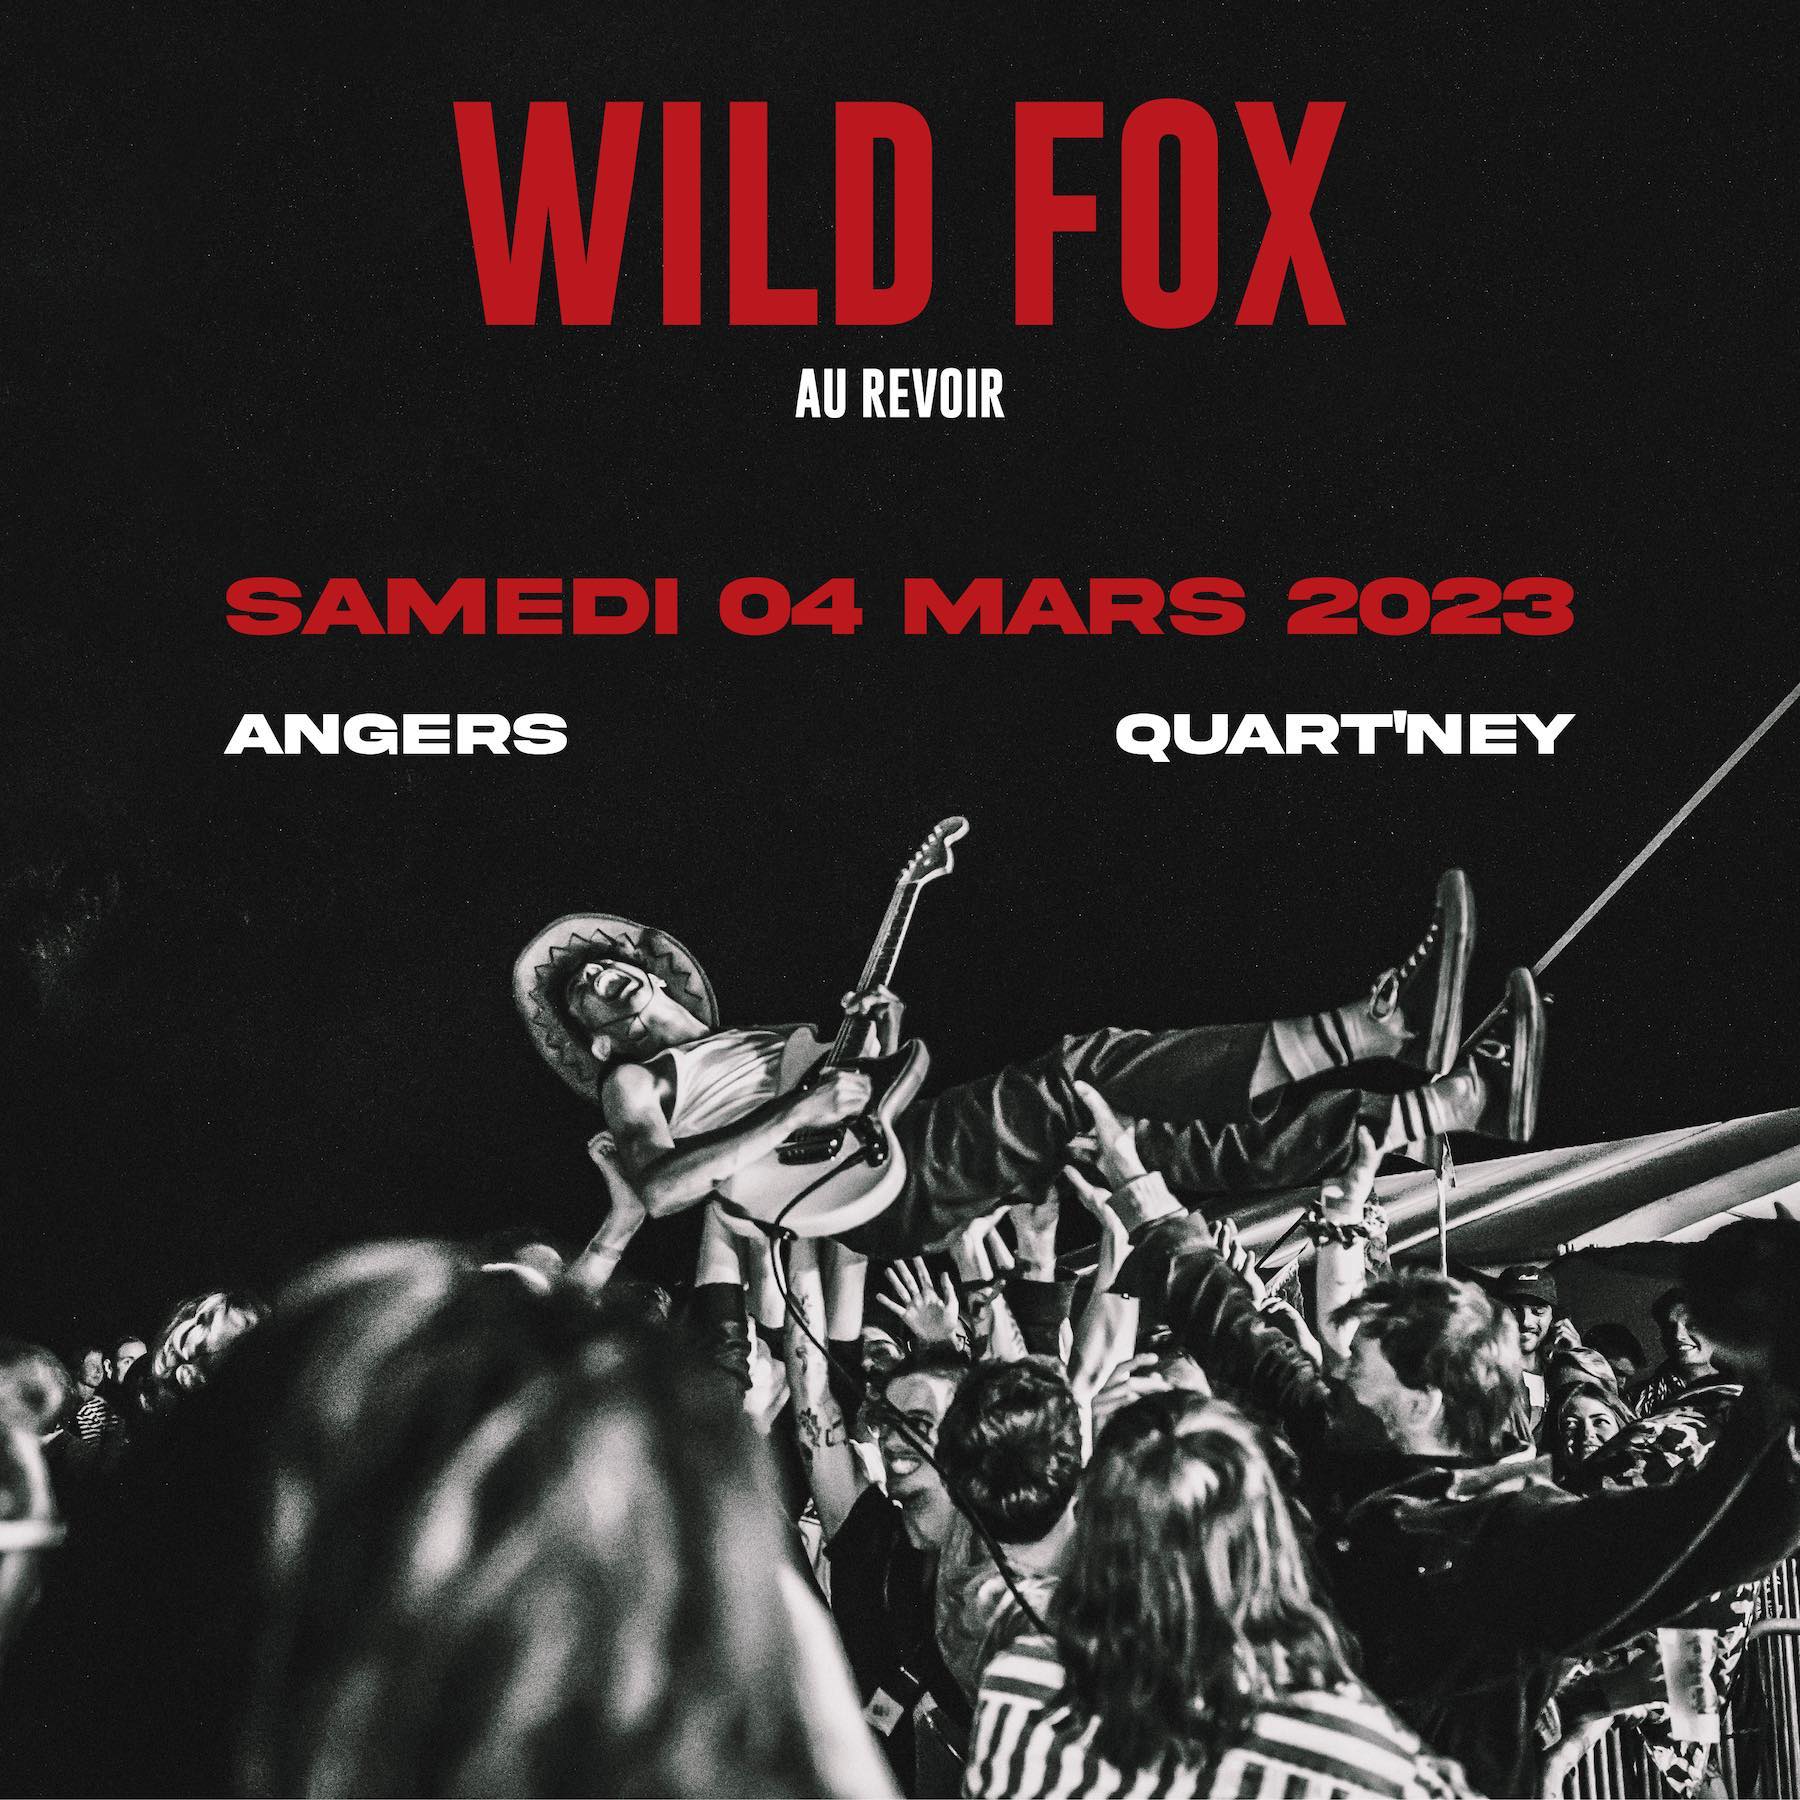 Wild Fox Au revoir